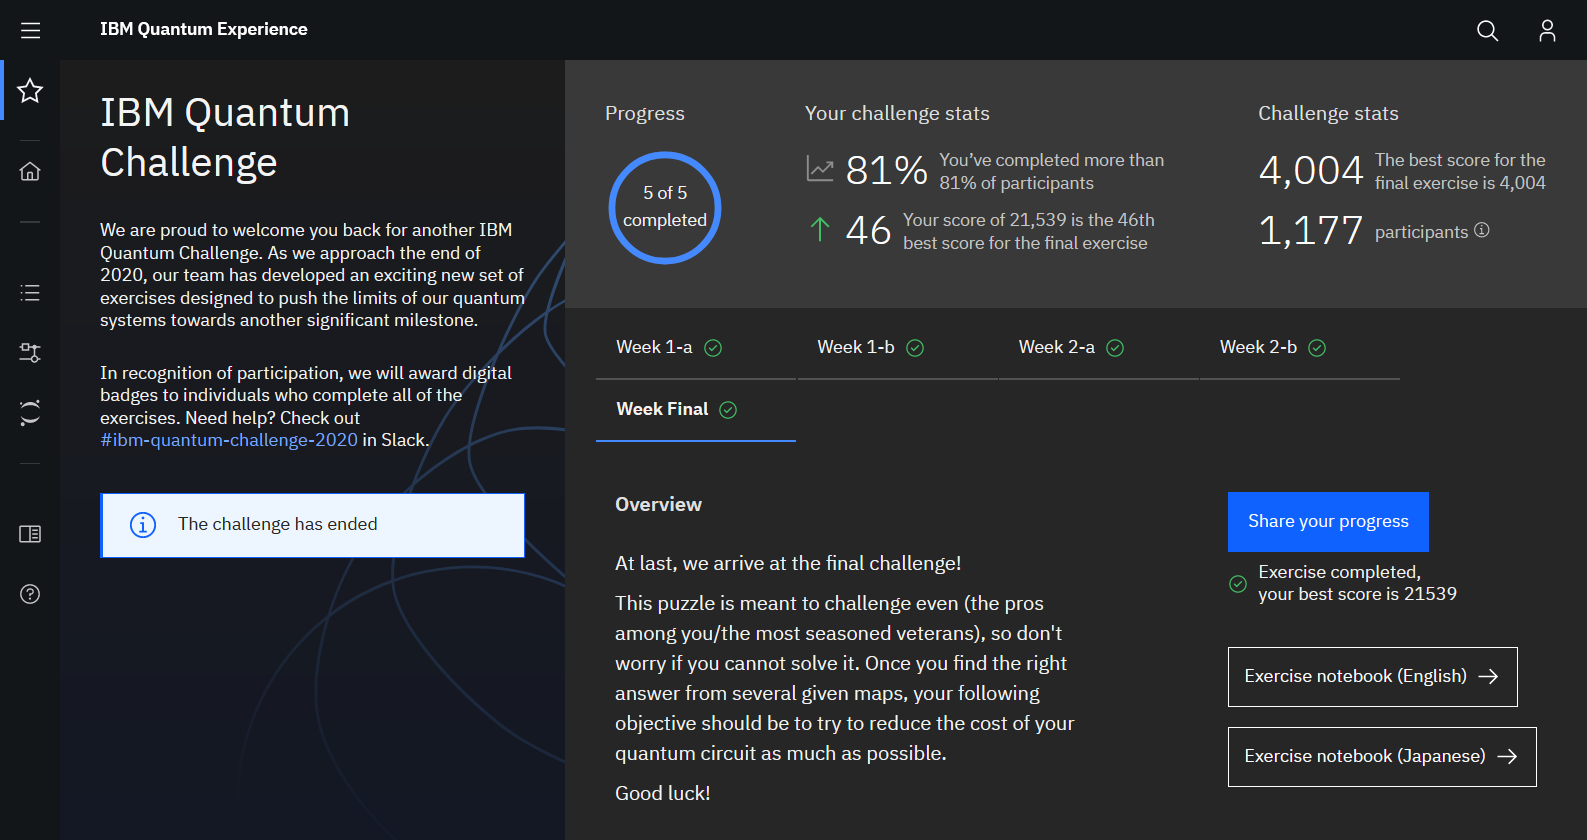 IBMQ Challenge Portal Screenshot